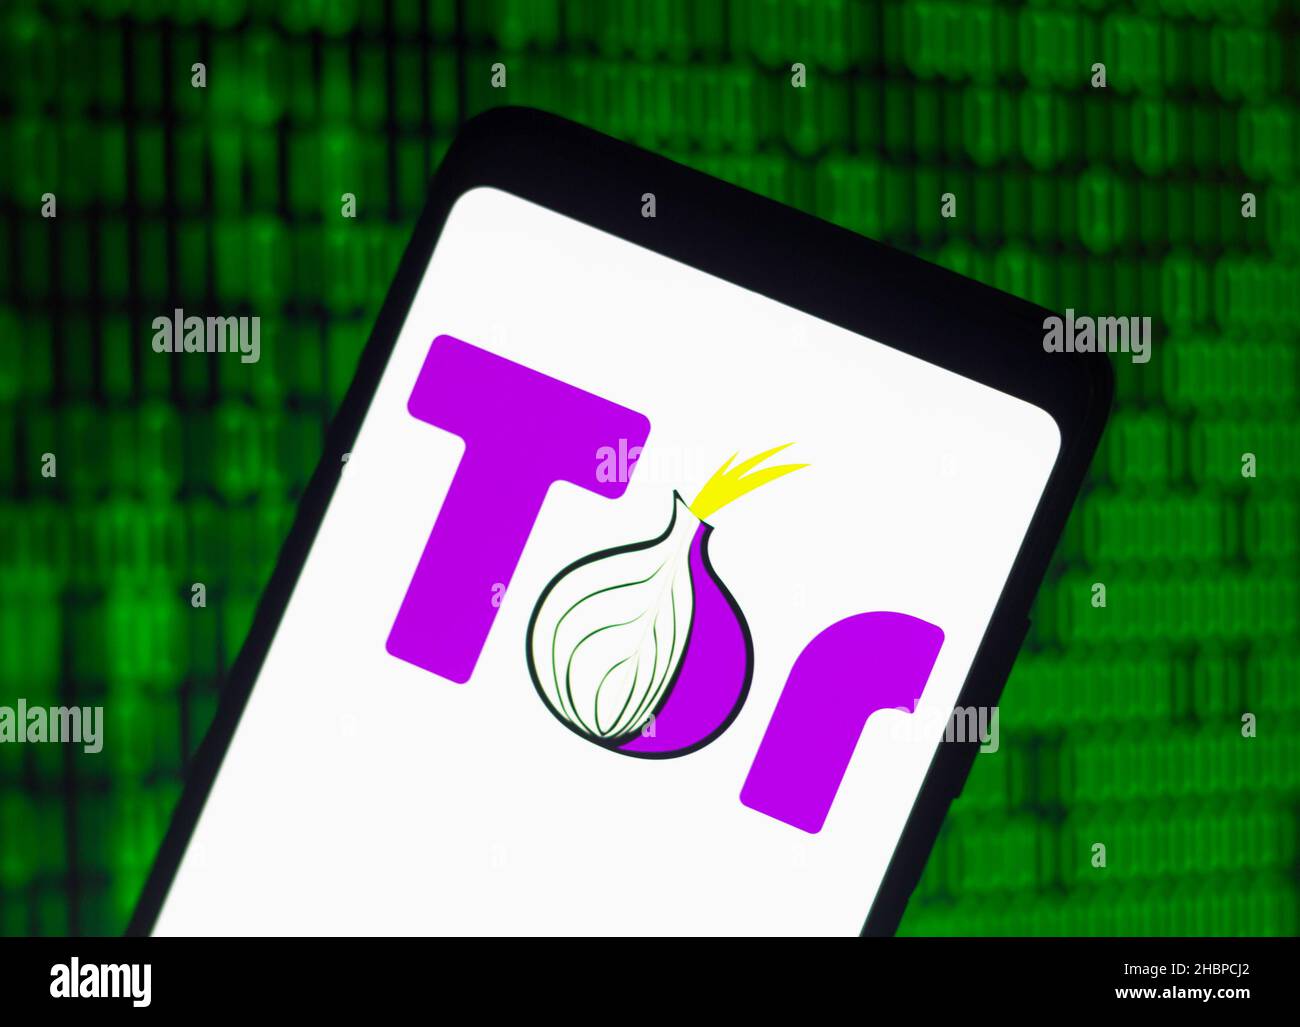 Tor browser картинки мега darknet фильмы mega2web